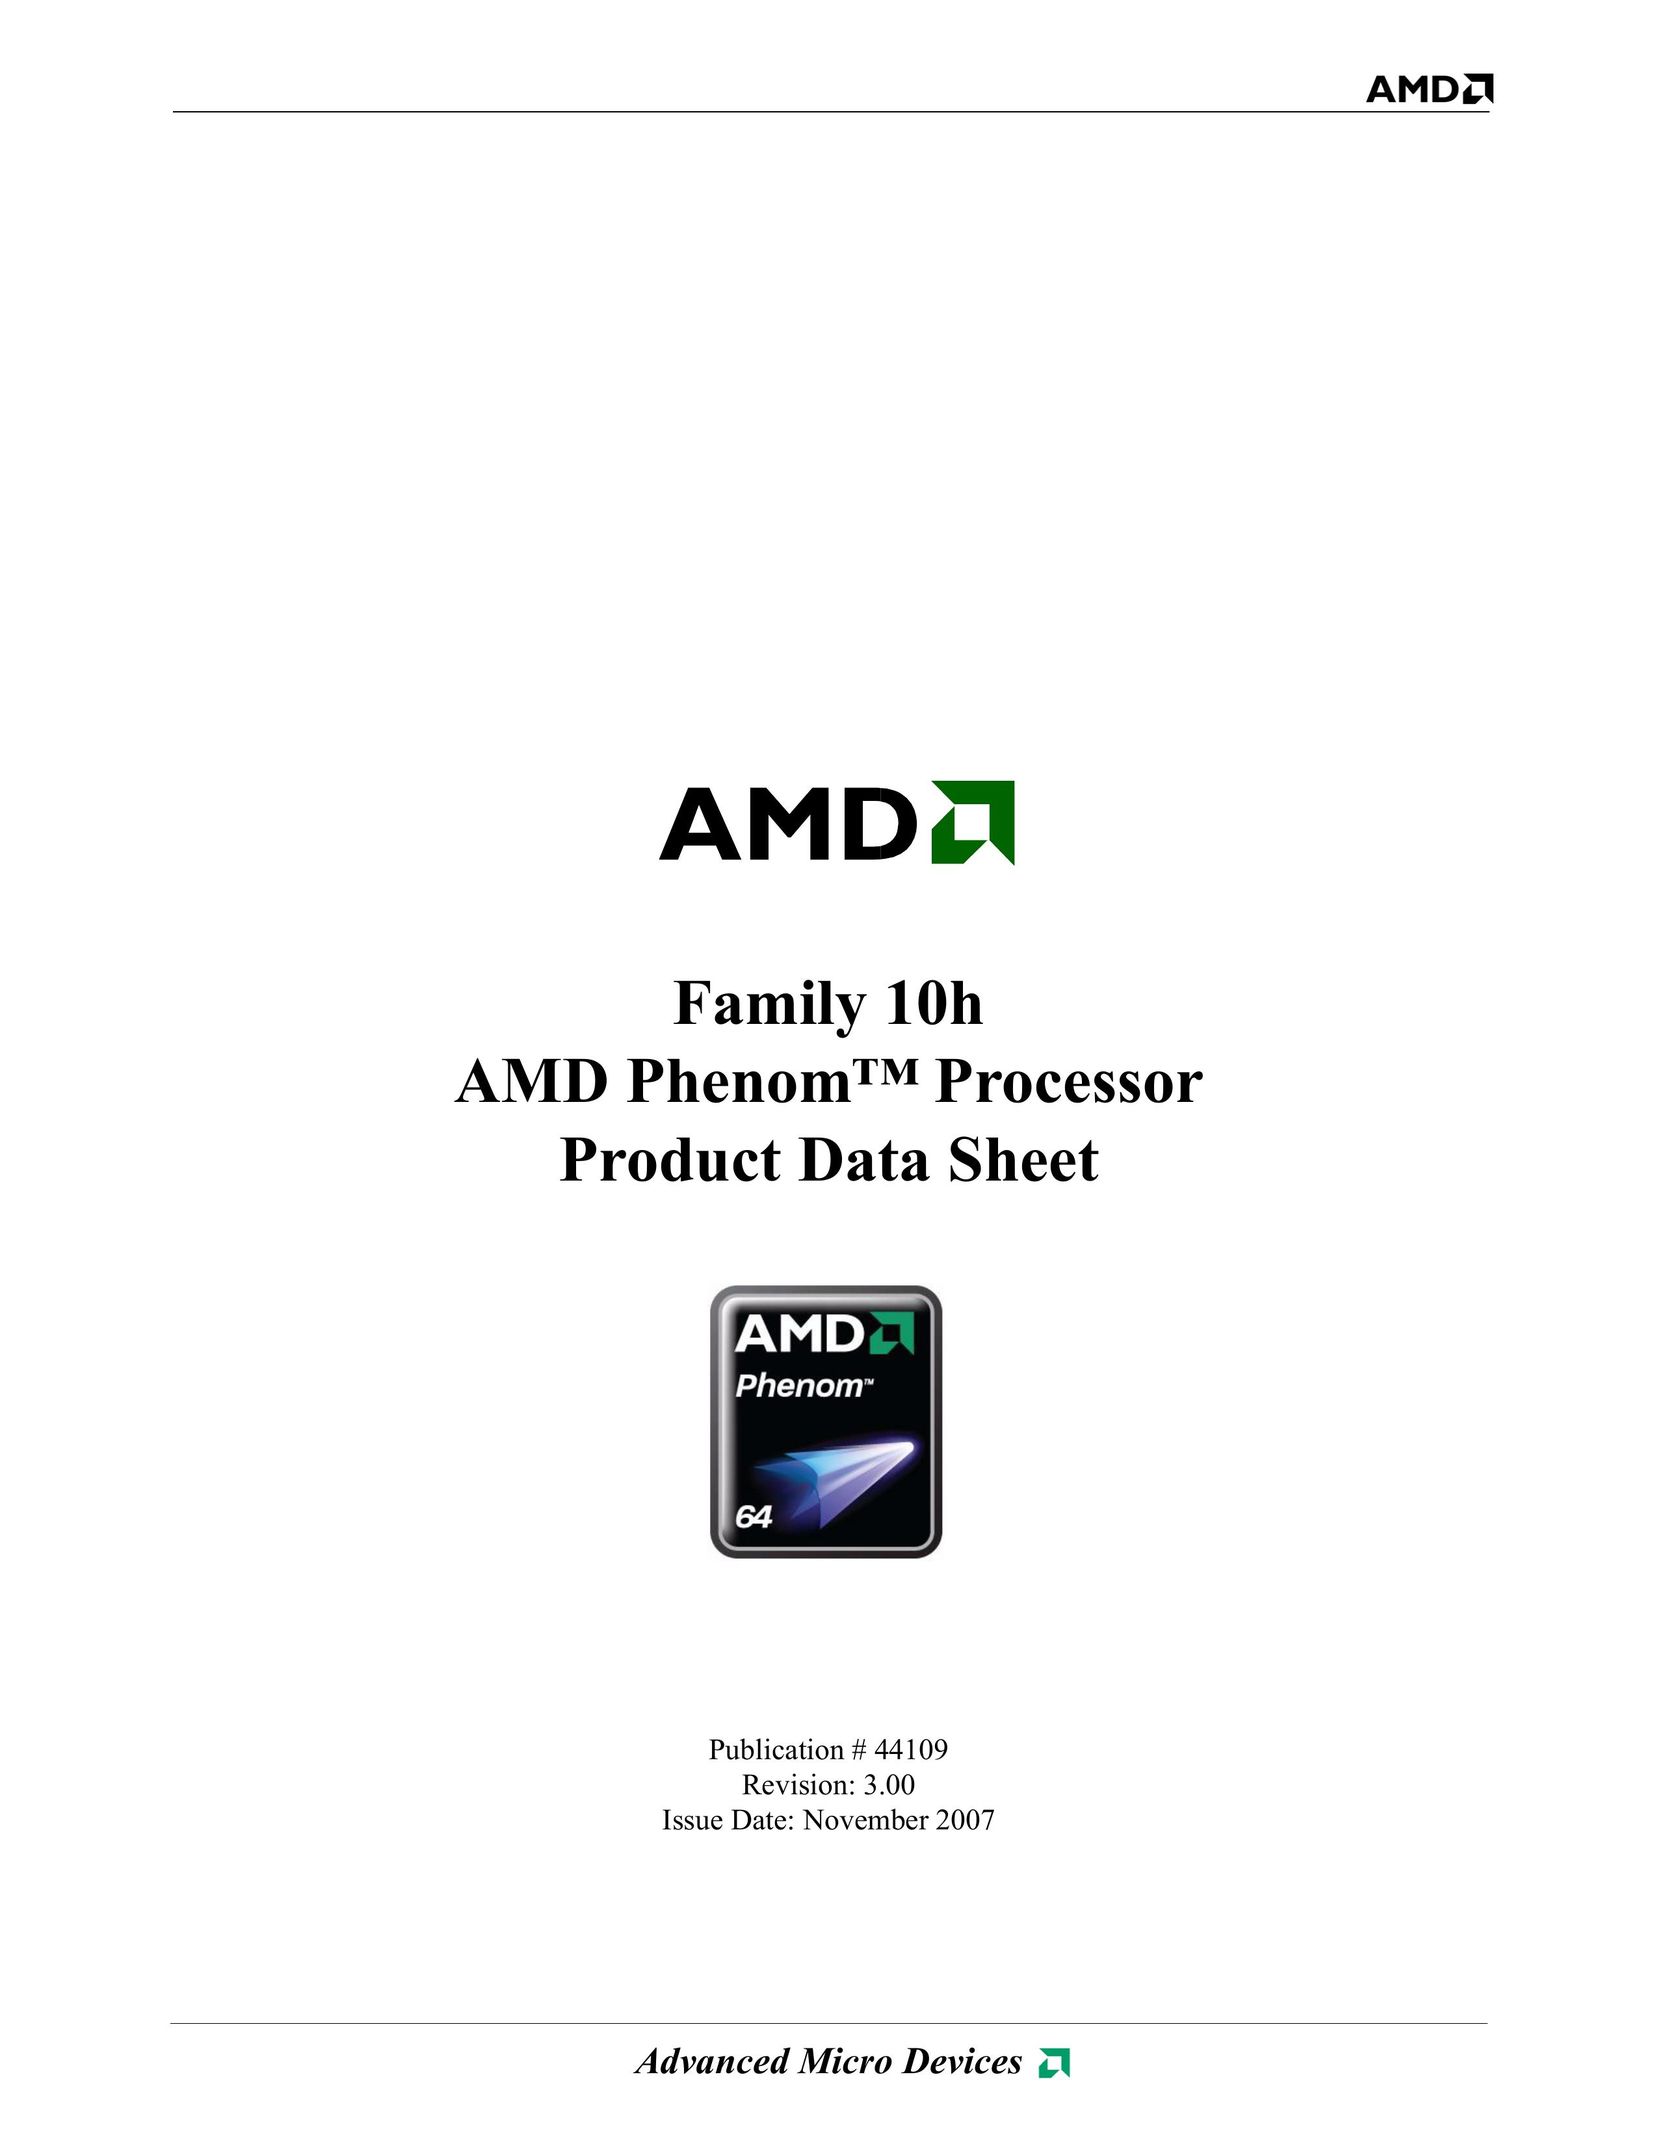 AMD AM2r2 Computer Hardware User Manual